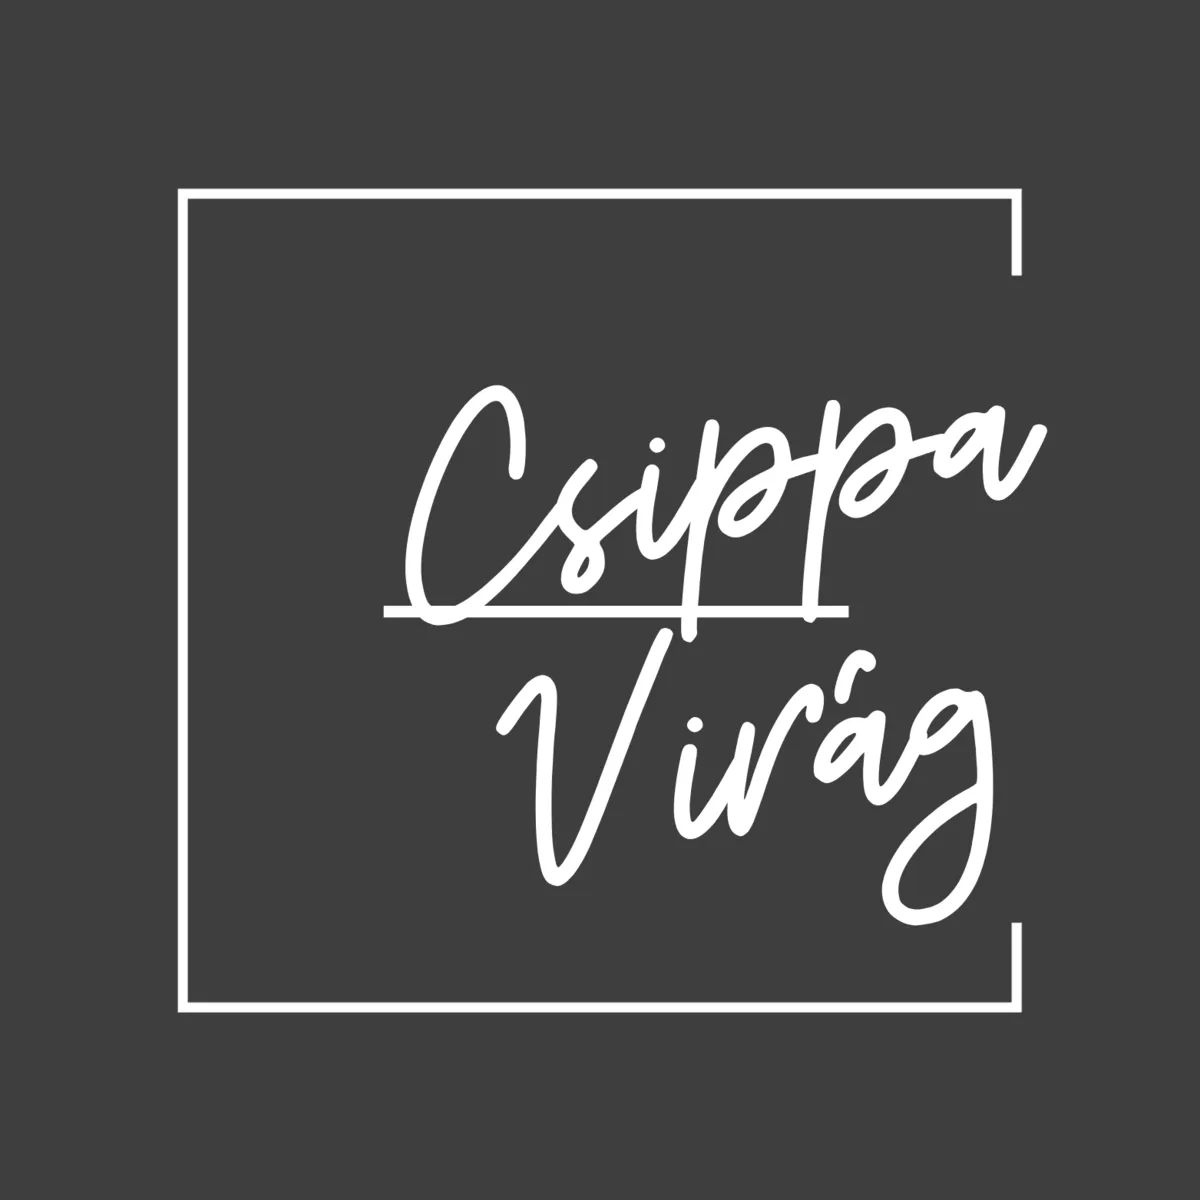 Csippa Virag Coaching 